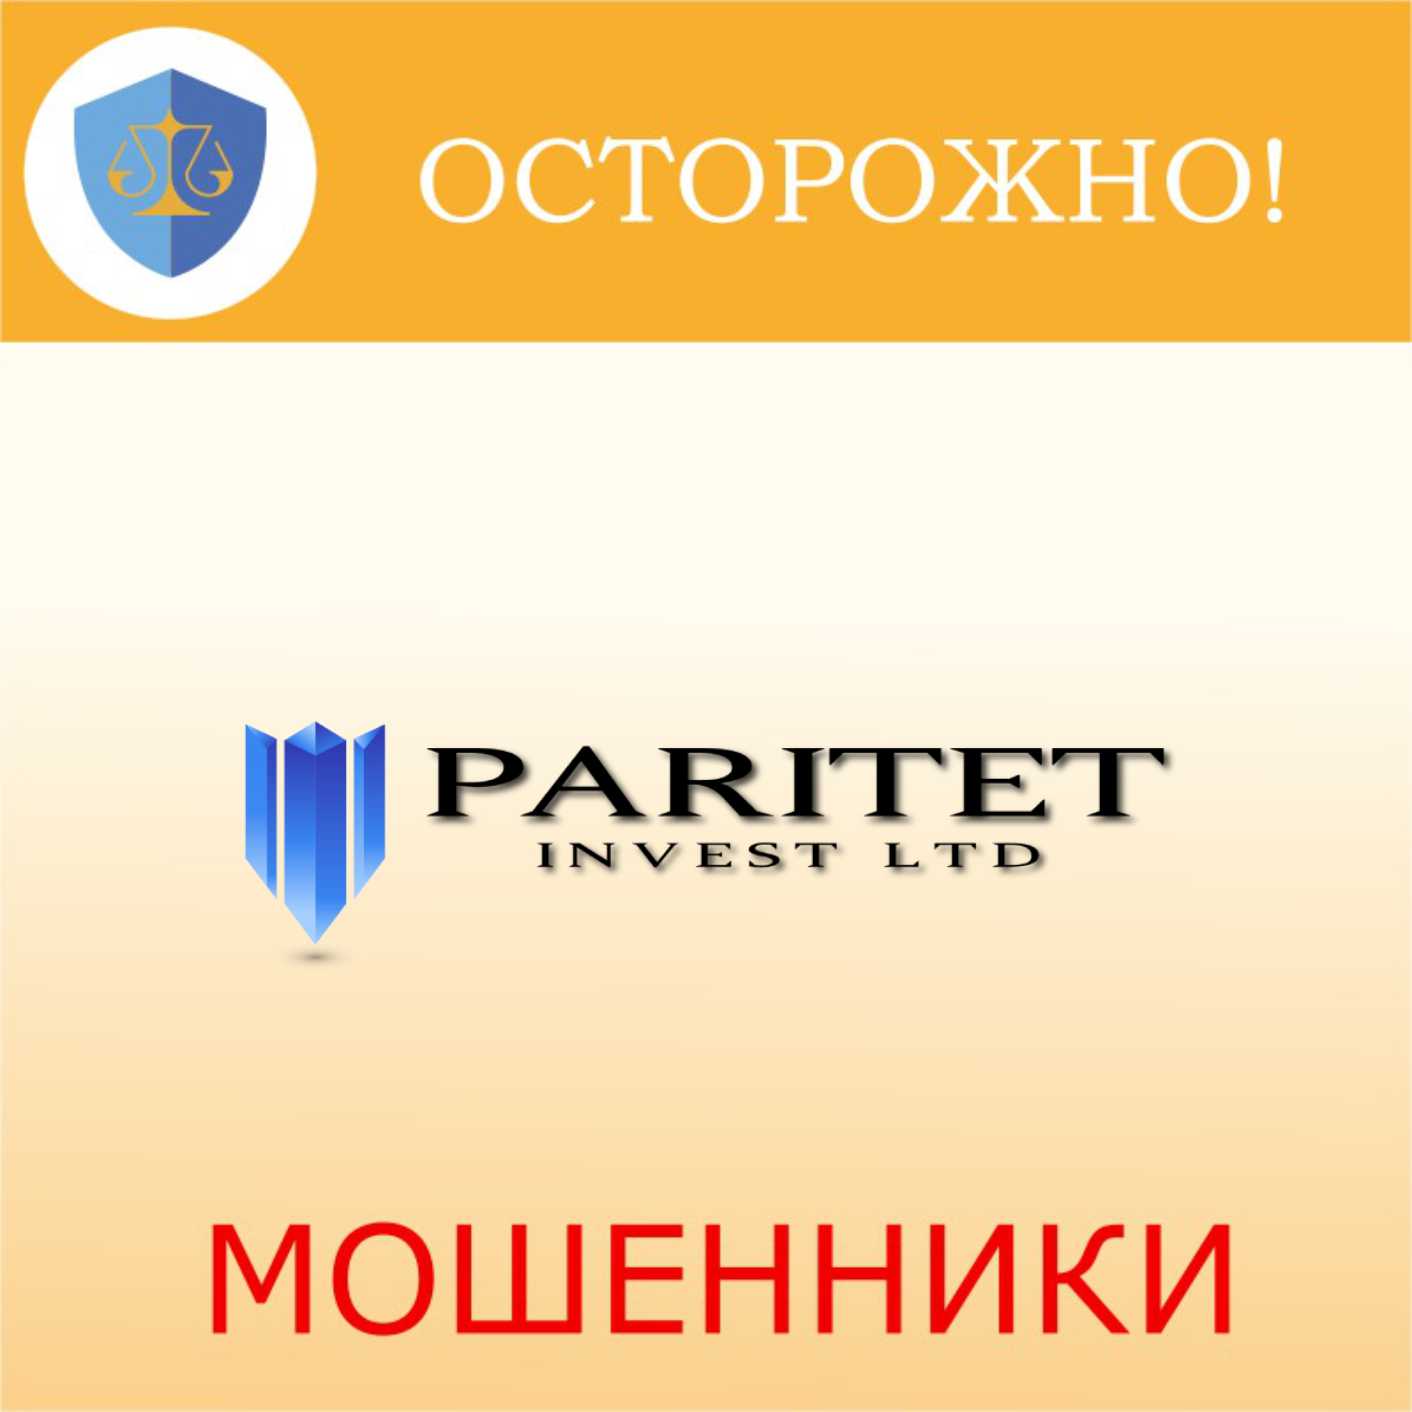 ParitetInvest Limited